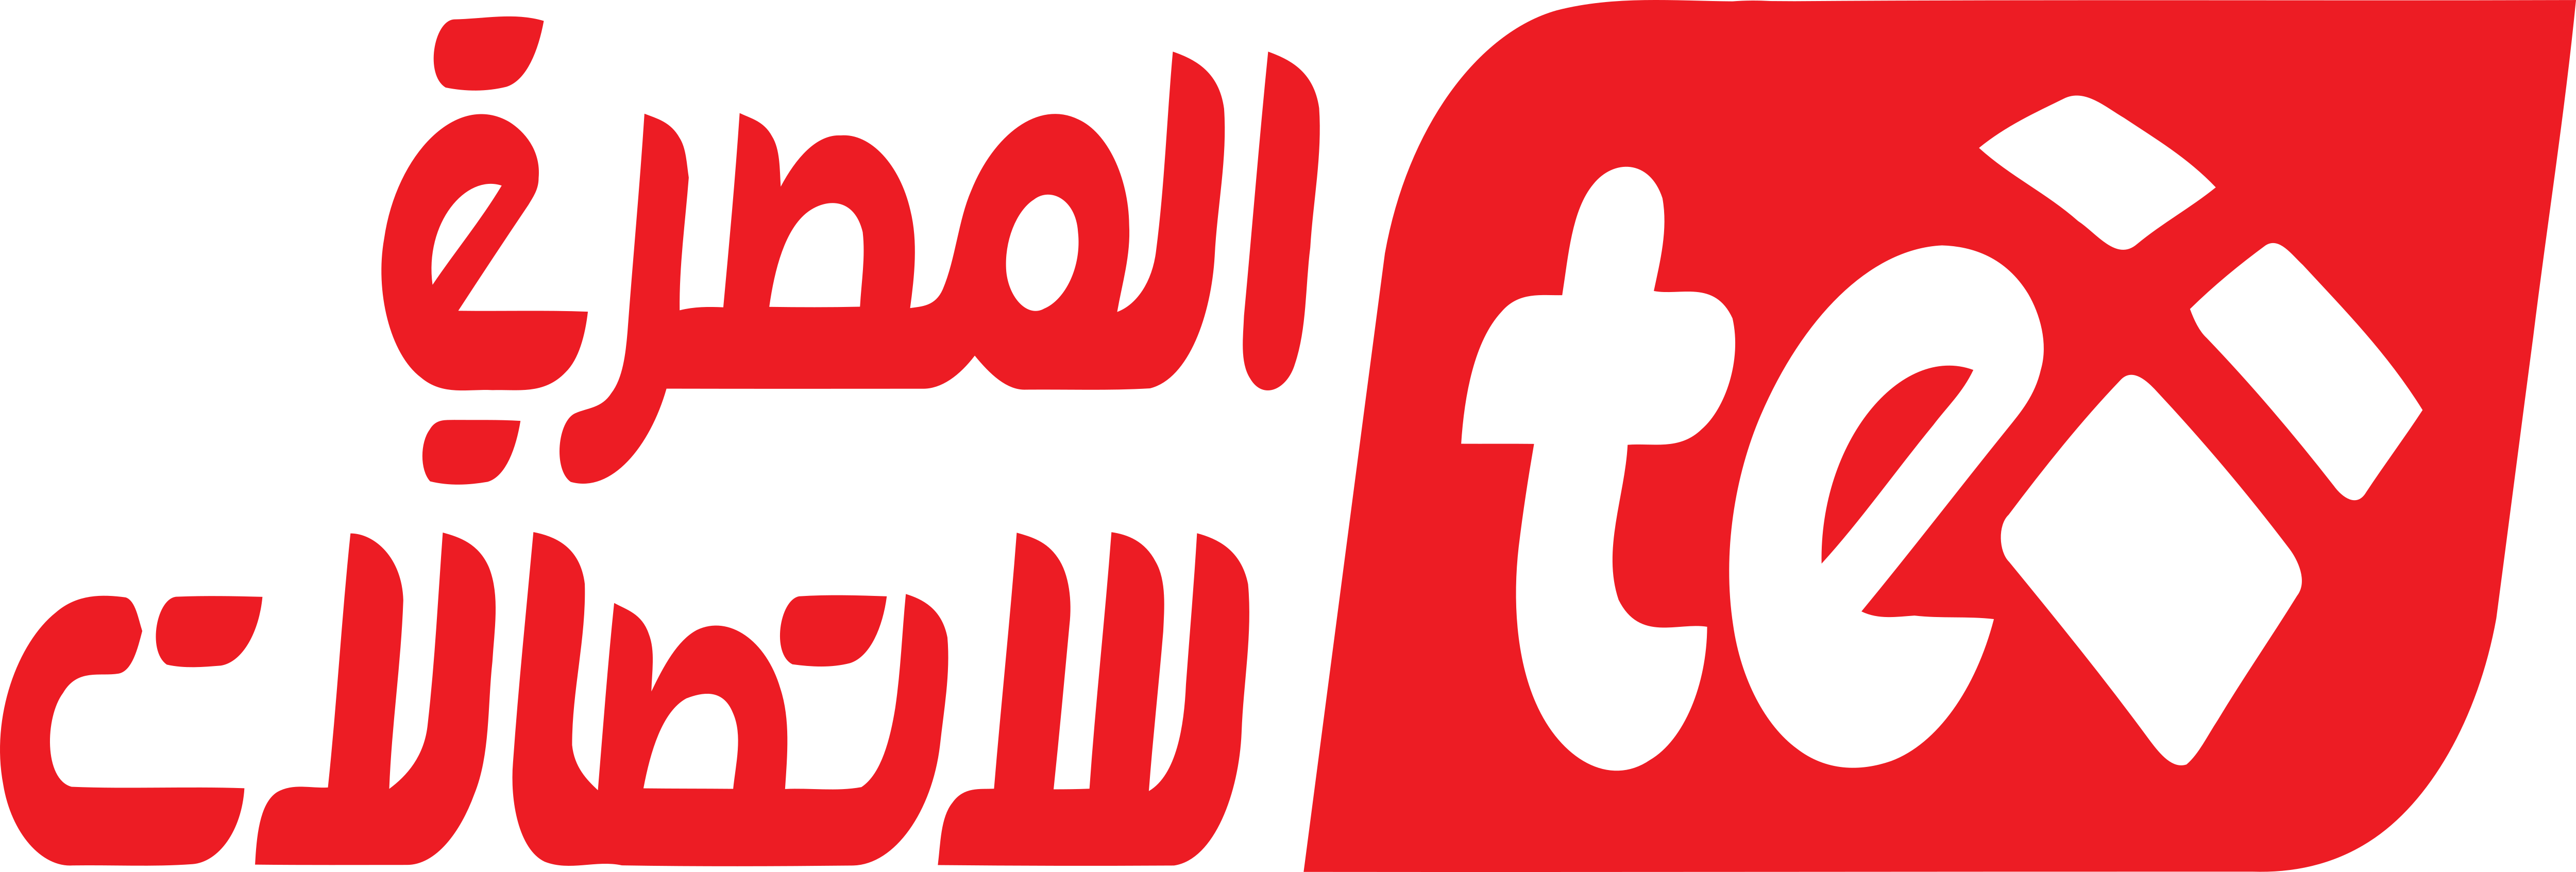 Fly Egypt лого. Флэш-Телеком лого. Сим Телеком логотип. Стек Телеком logo. Eastern company